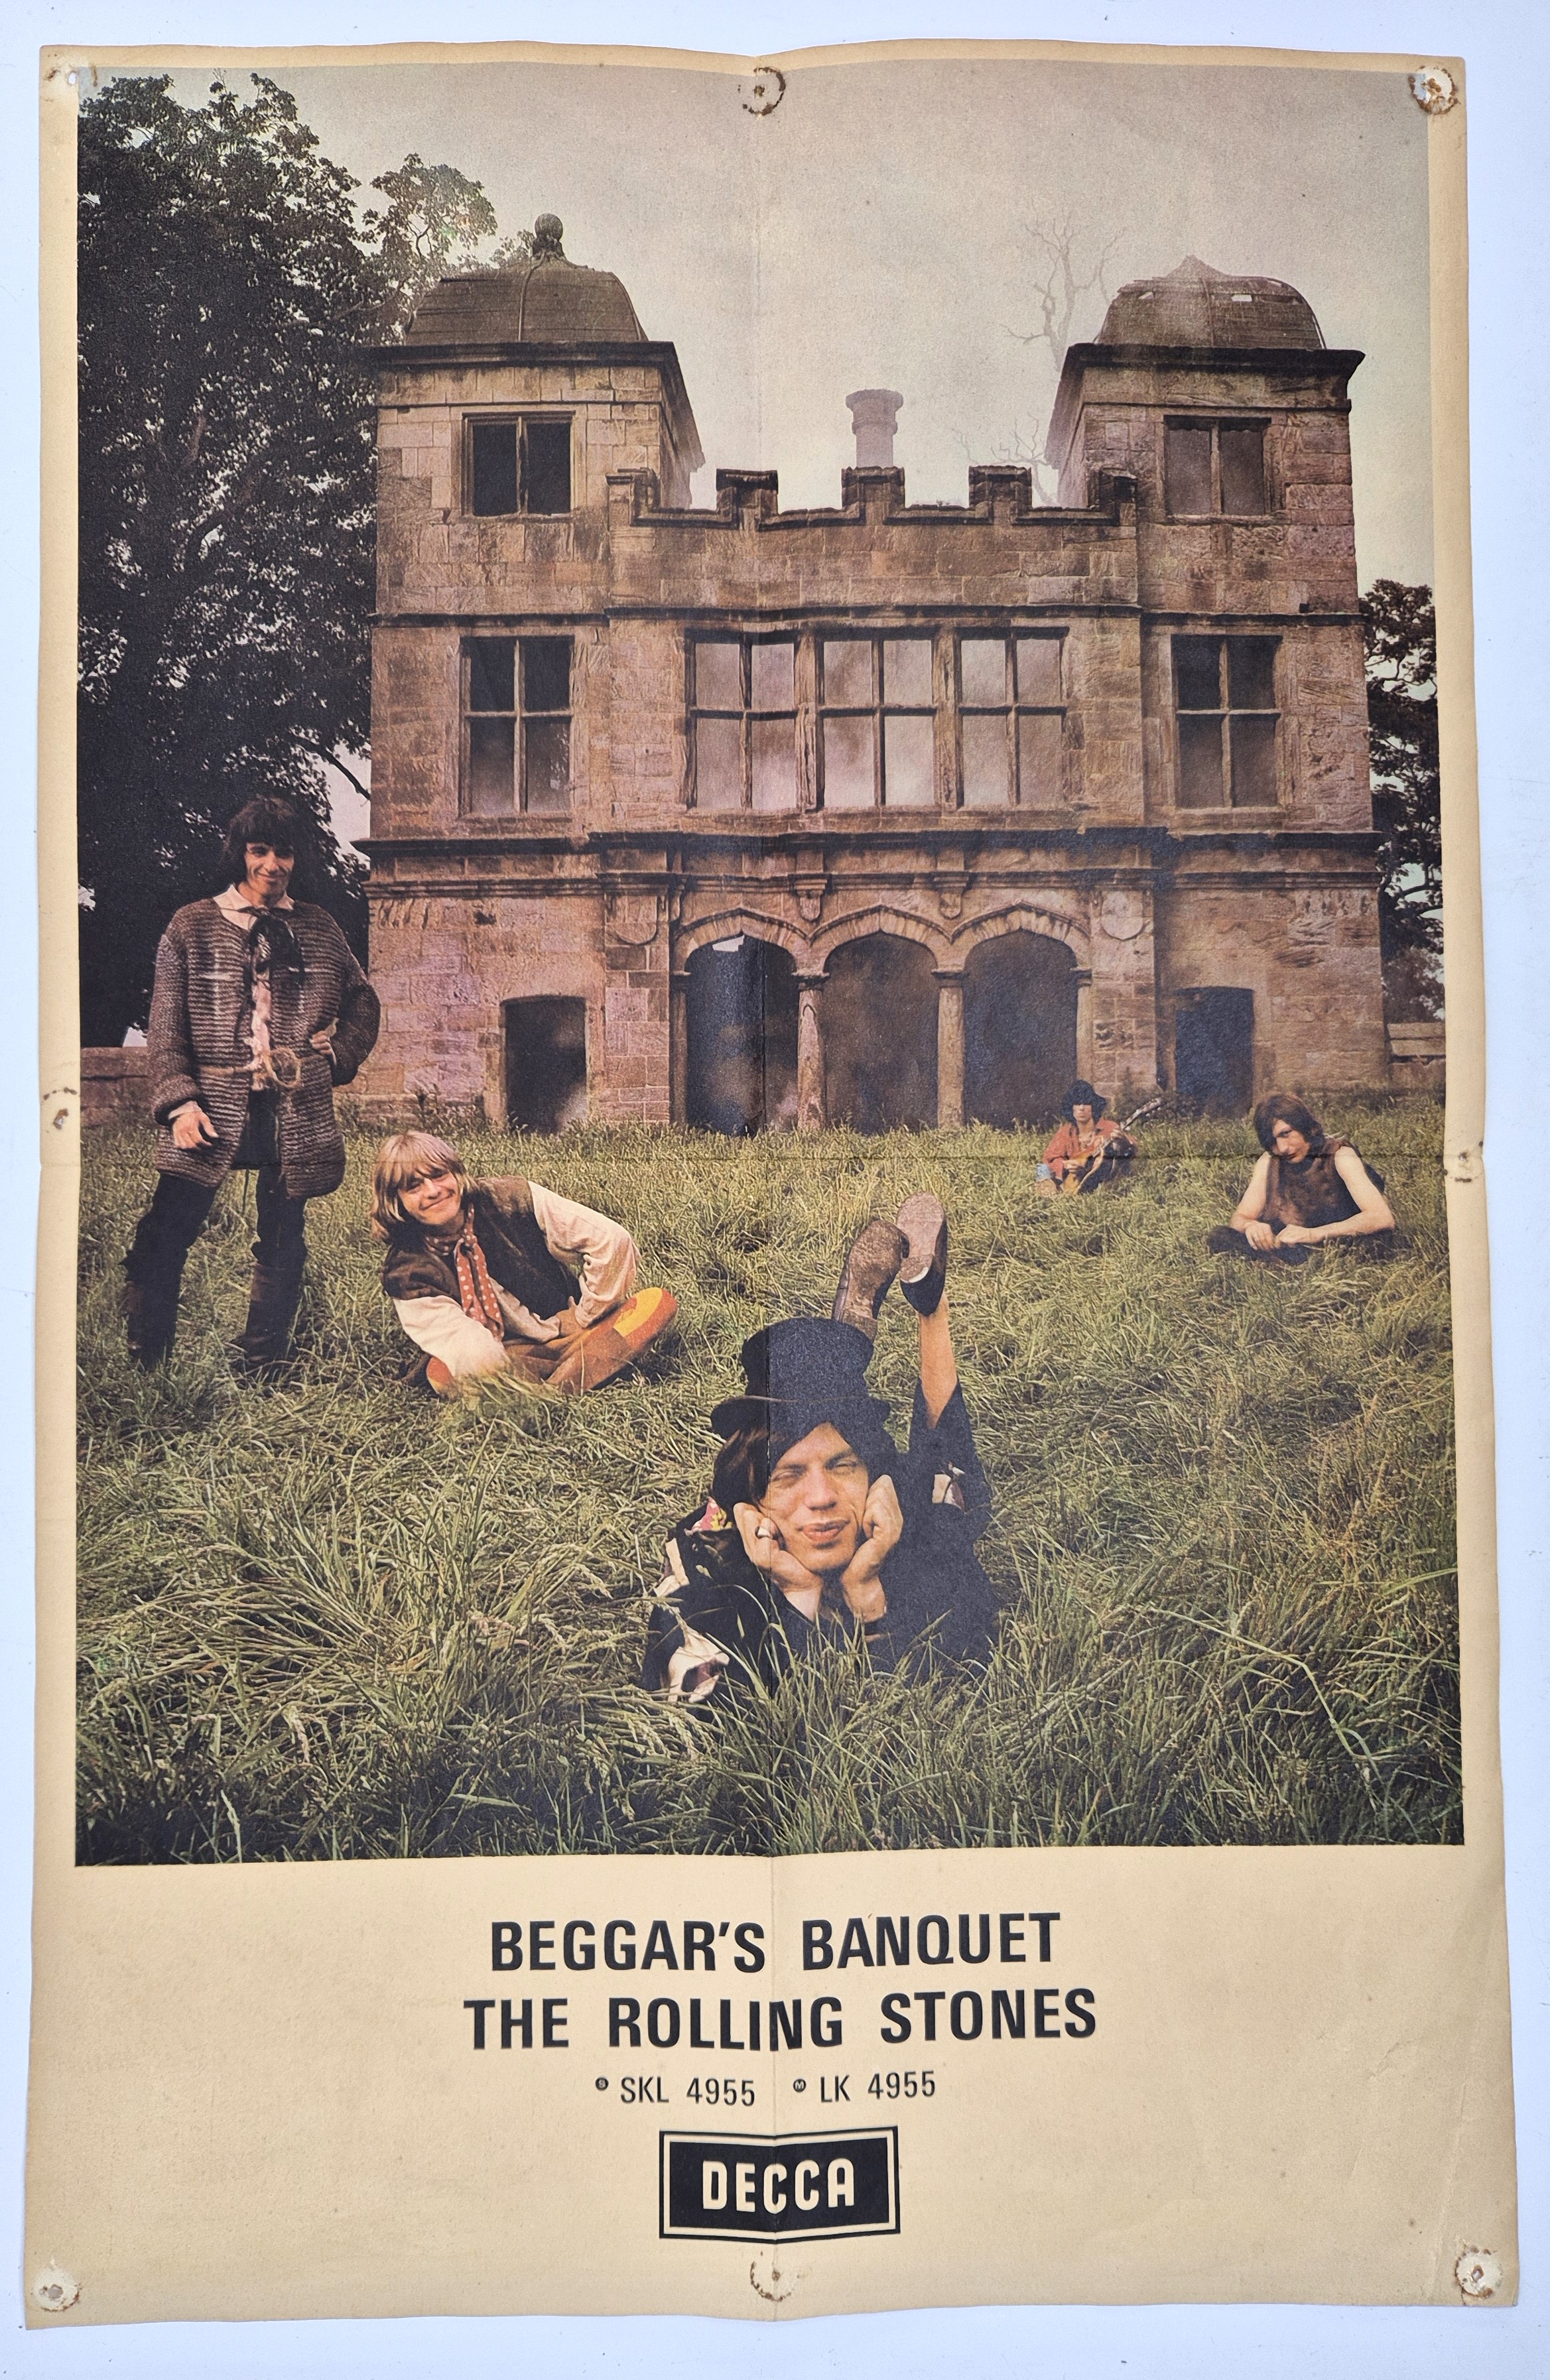 An original vintage Rolling Stones Decca Records promotional poster for "Beggar's Banquet", December